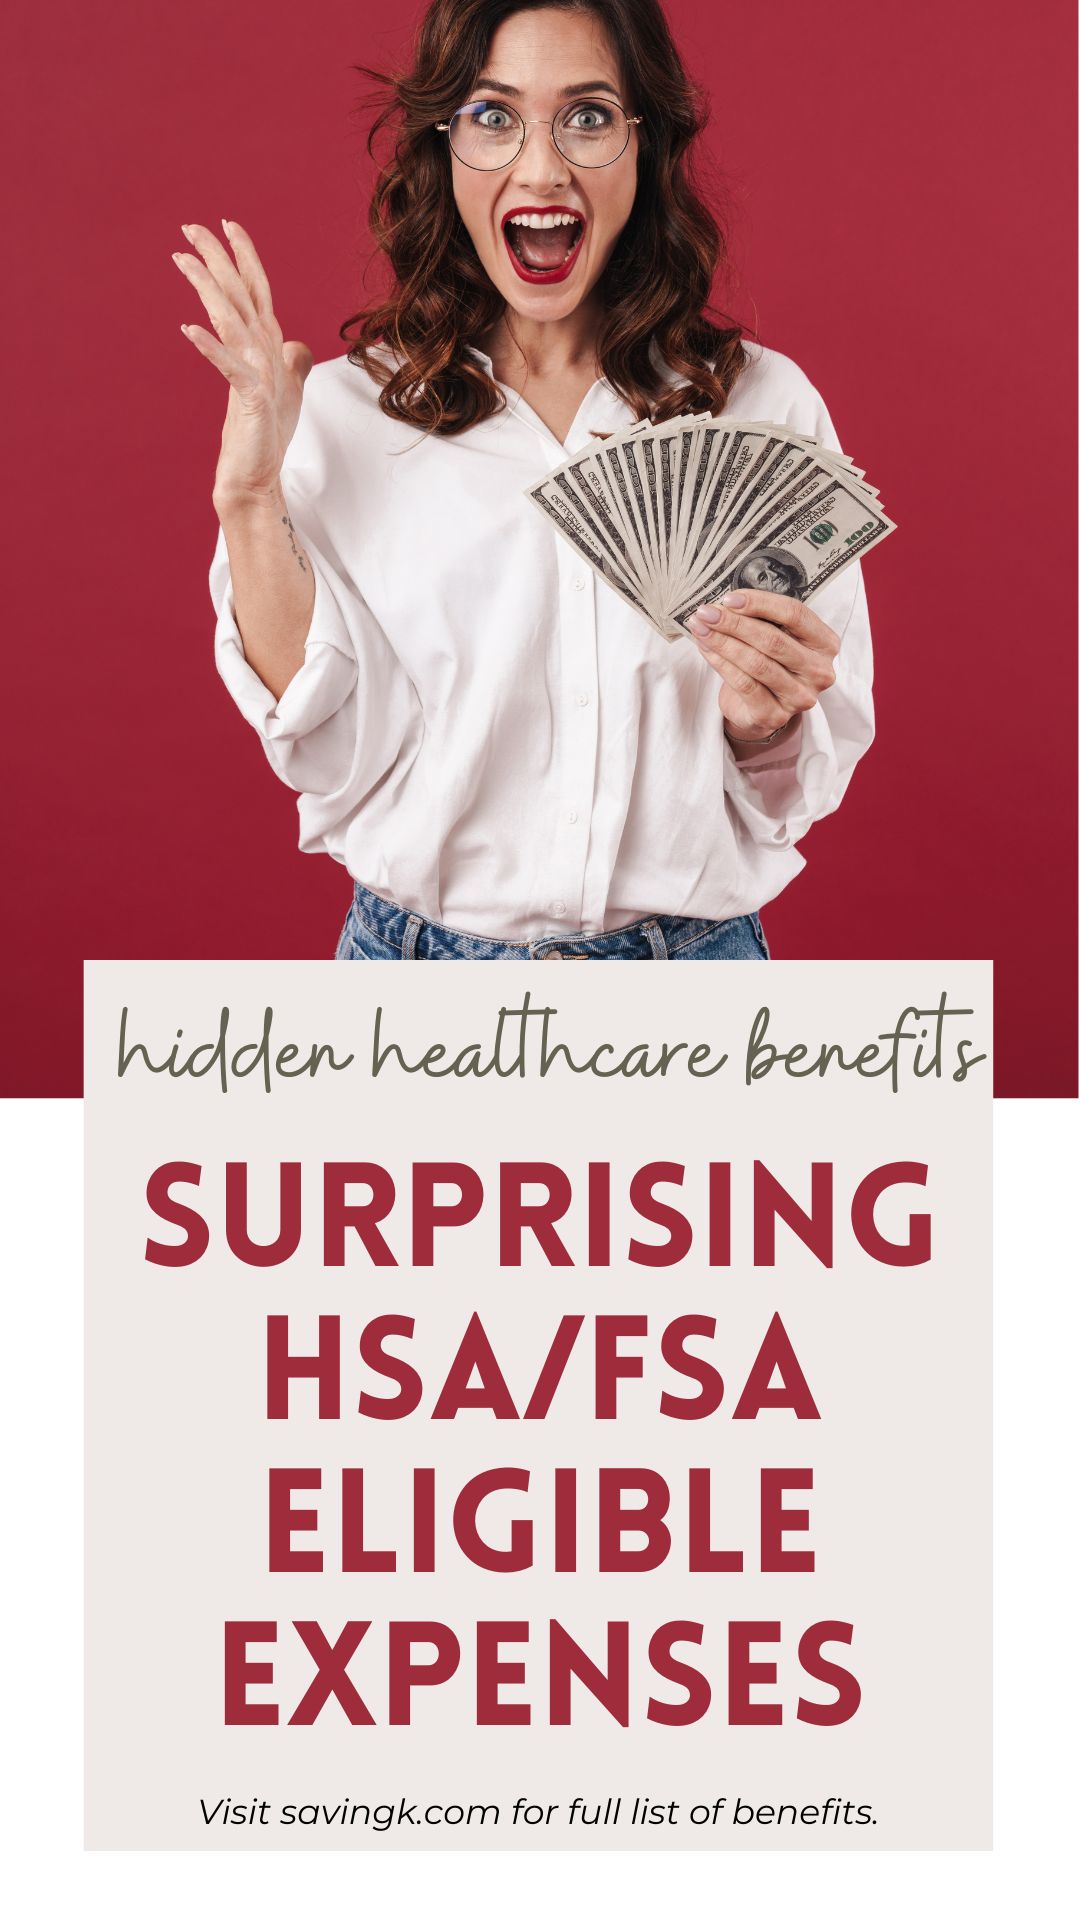 Hidden Healthcare Benefits: Surprising HSA/FSA Eligible Expenses